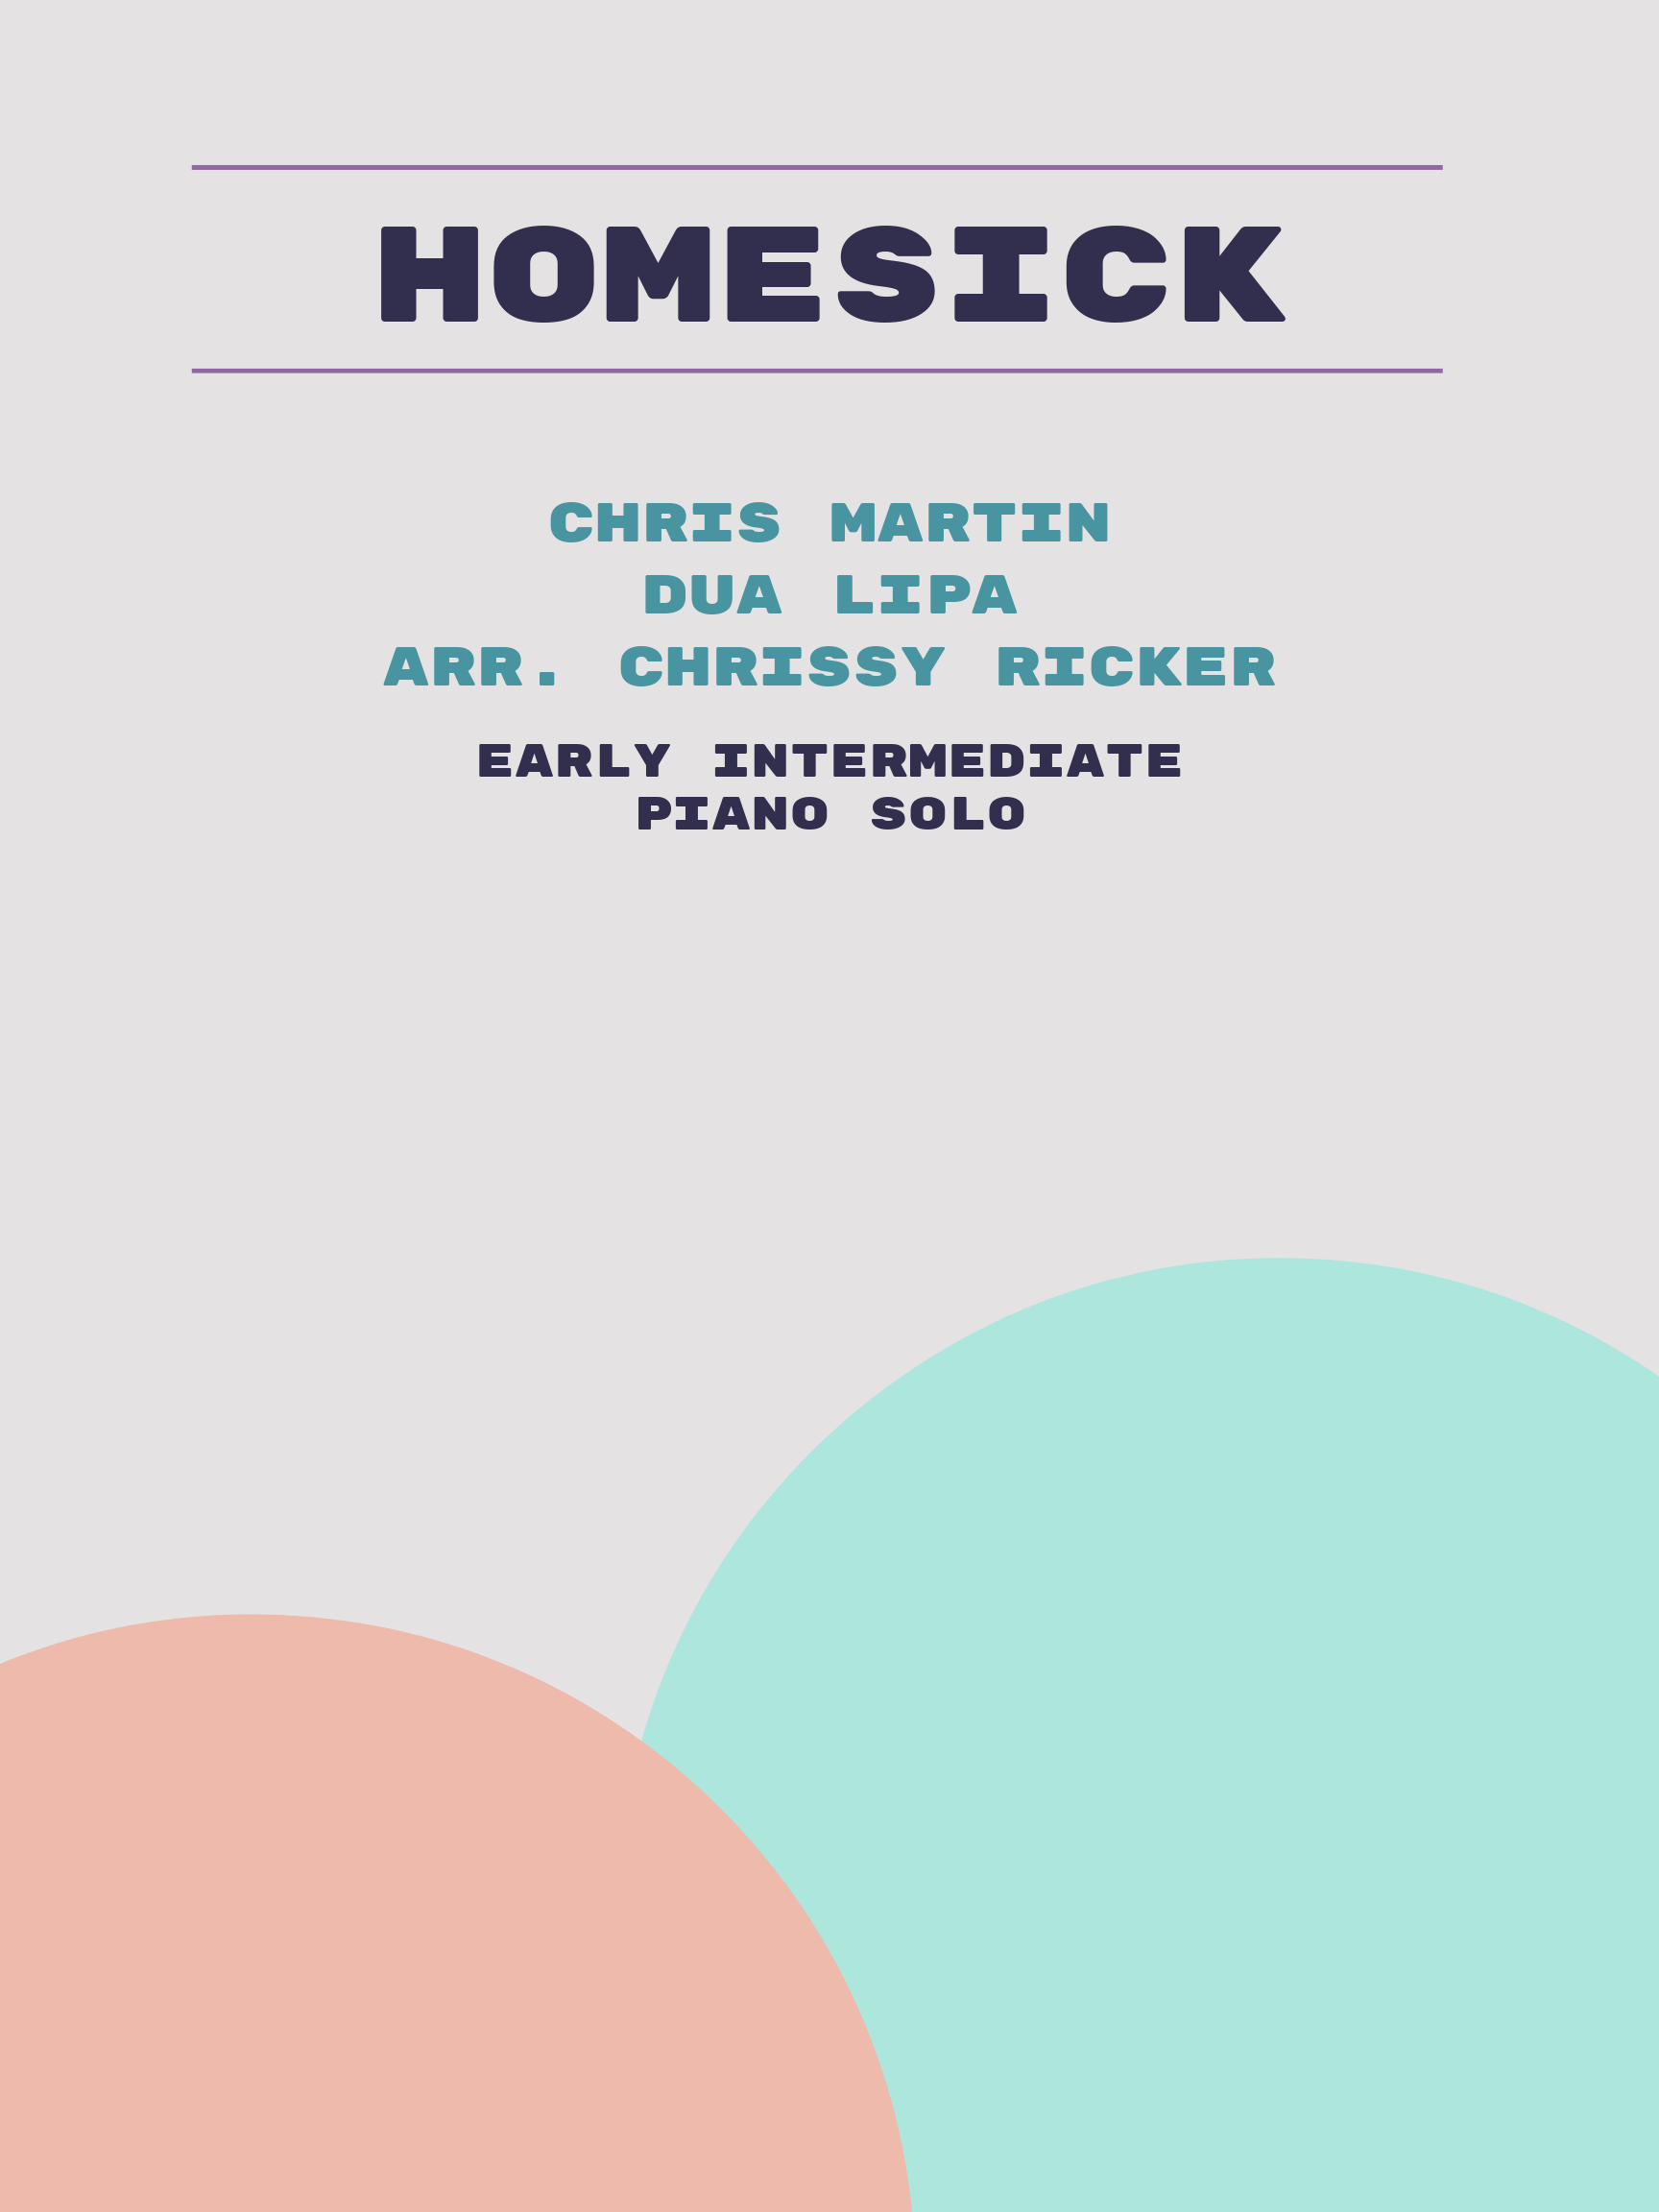 Homesick by Chris Martin, Dua Lipa